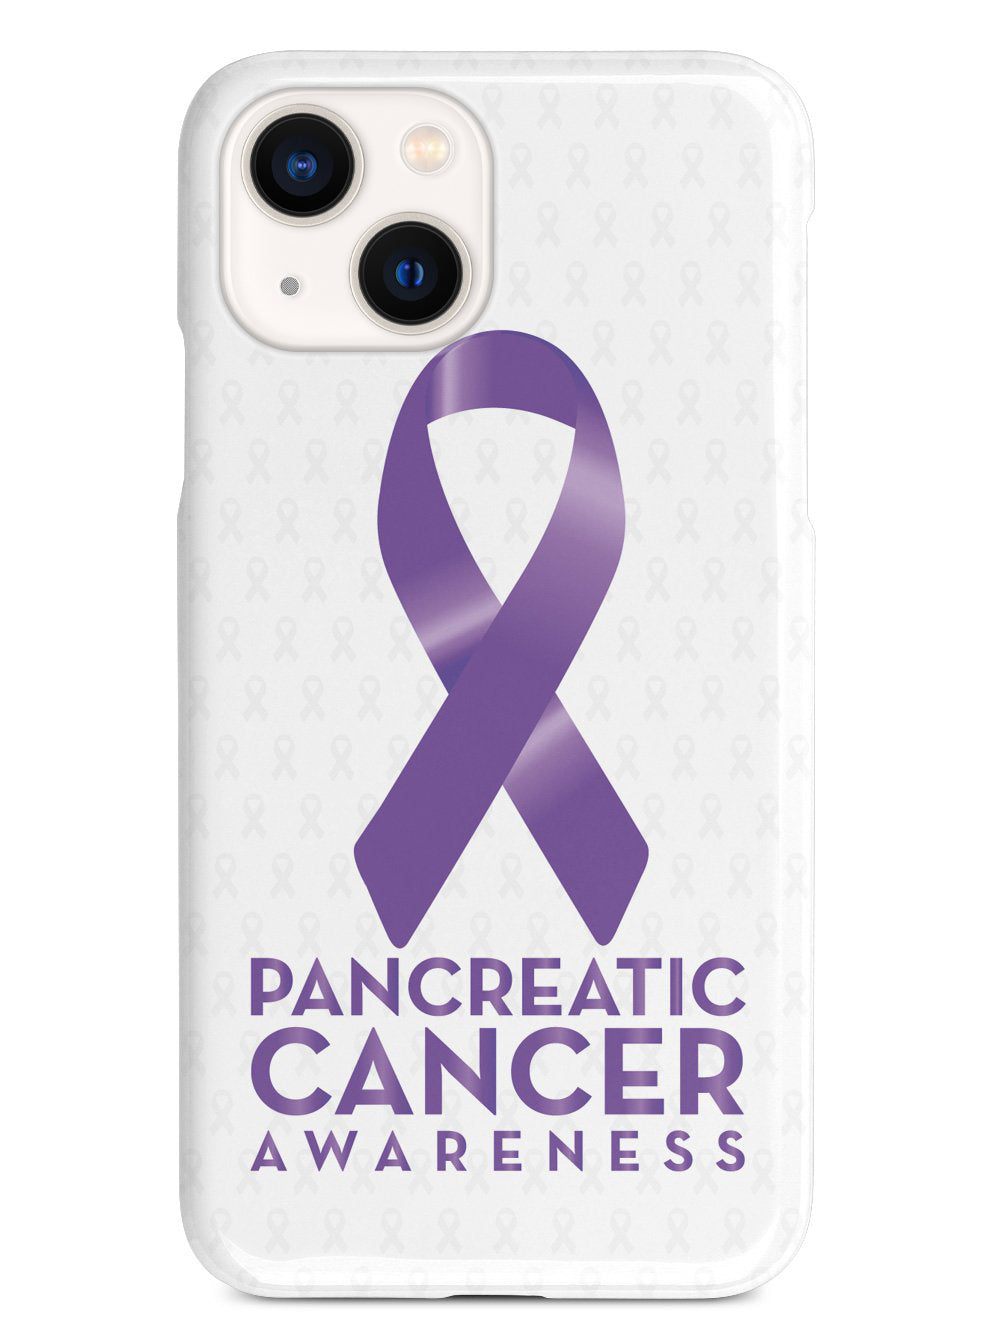 Pancreatic Cancer Awareness - White Case